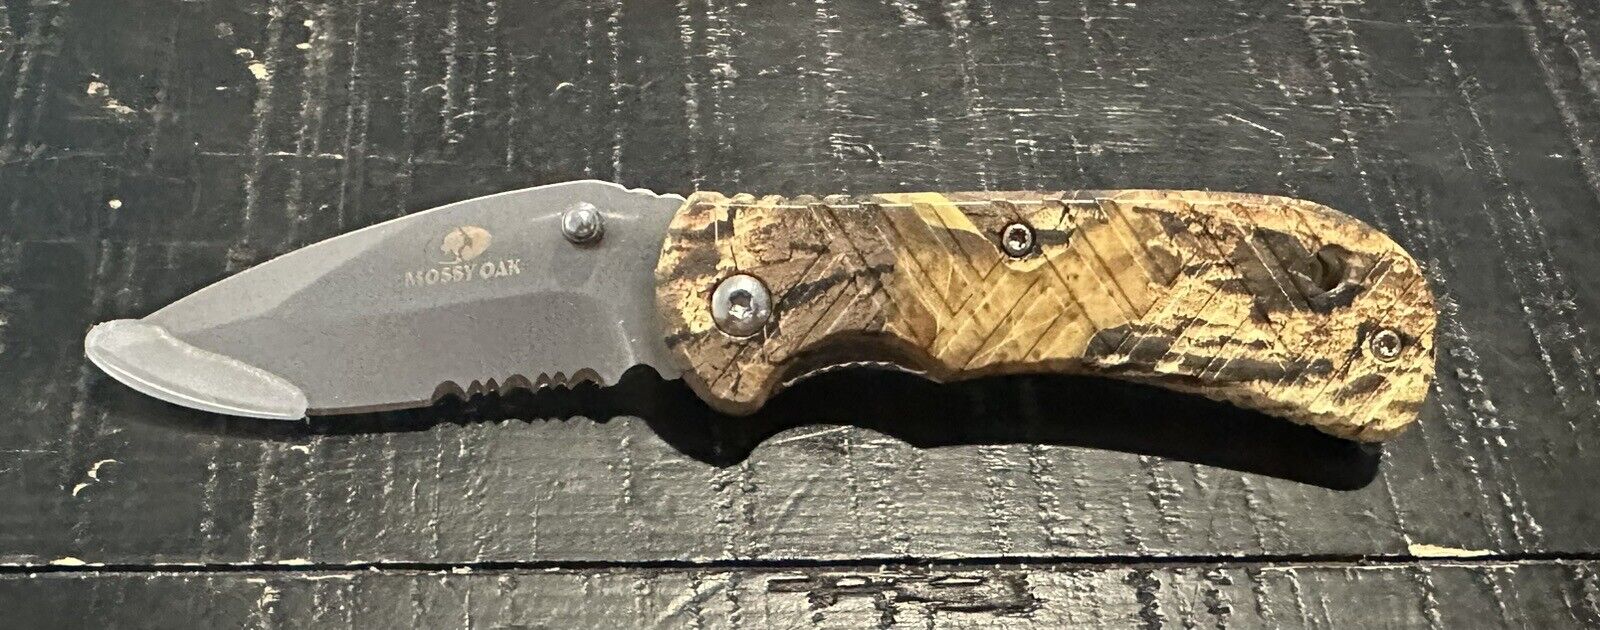 Mossy Oak Camo Pocket Knife